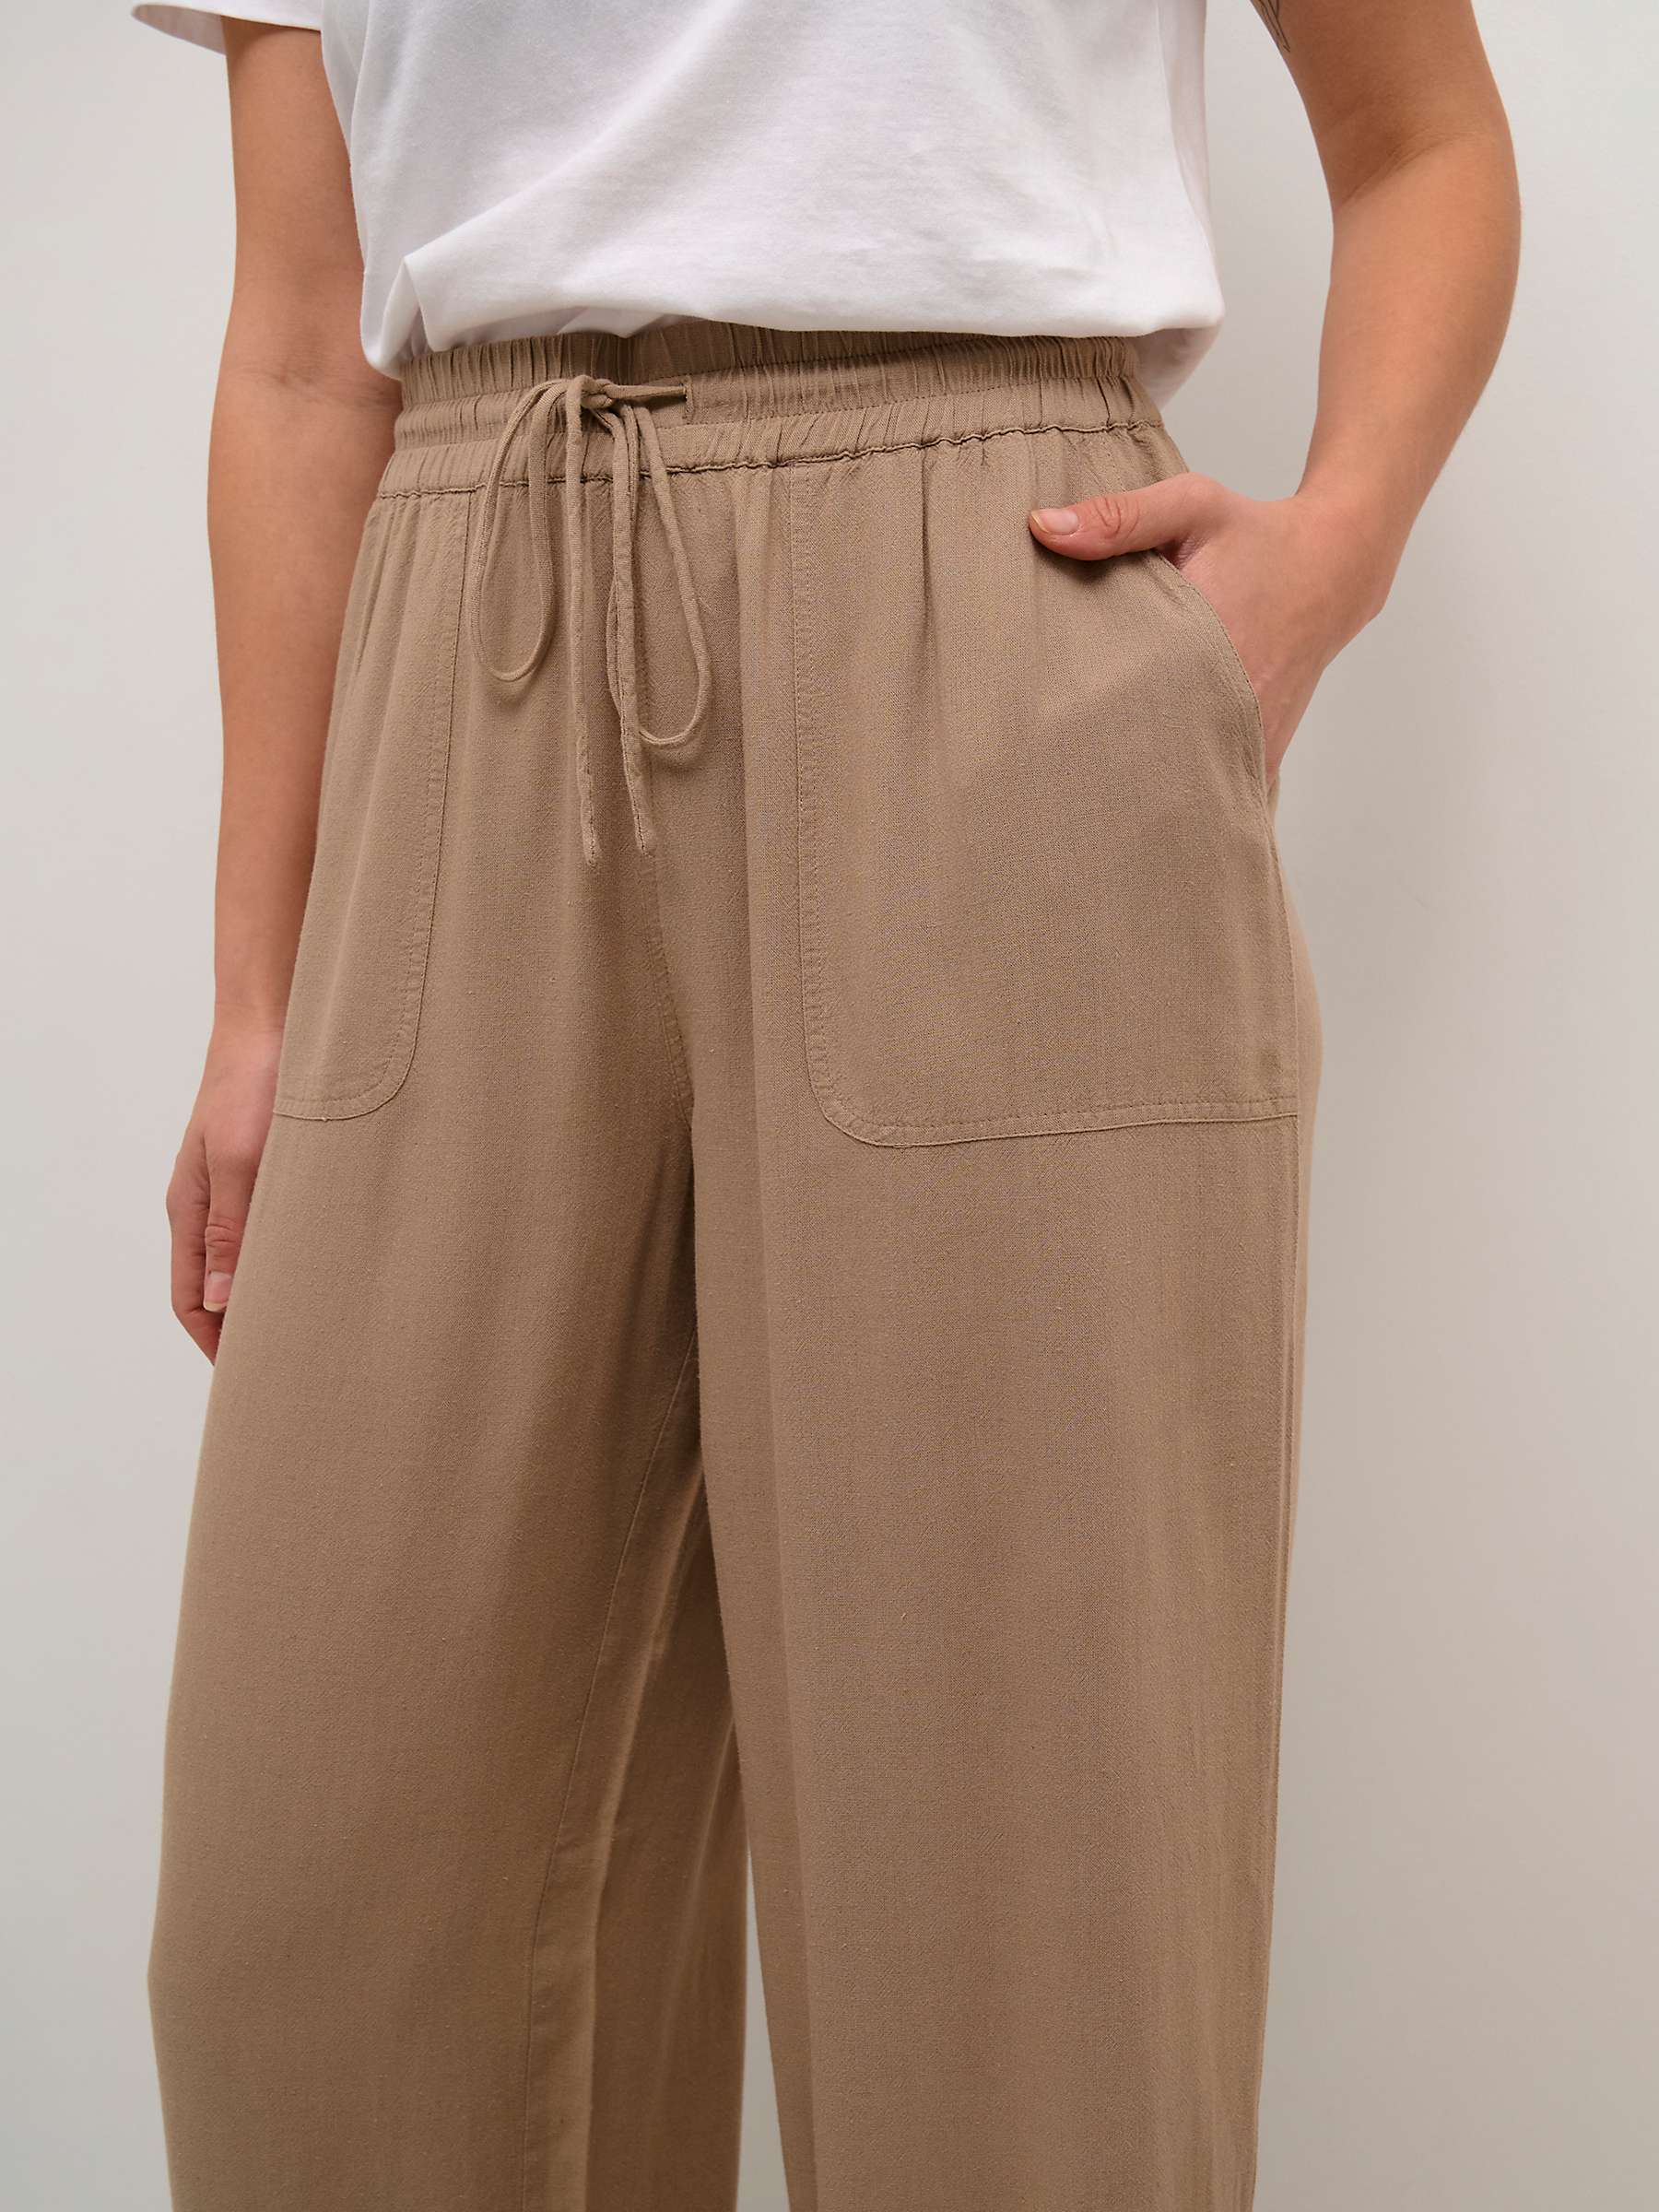 Buy KAFFE Milia Linen Blend Long Trousers, Chinchilla Online at johnlewis.com